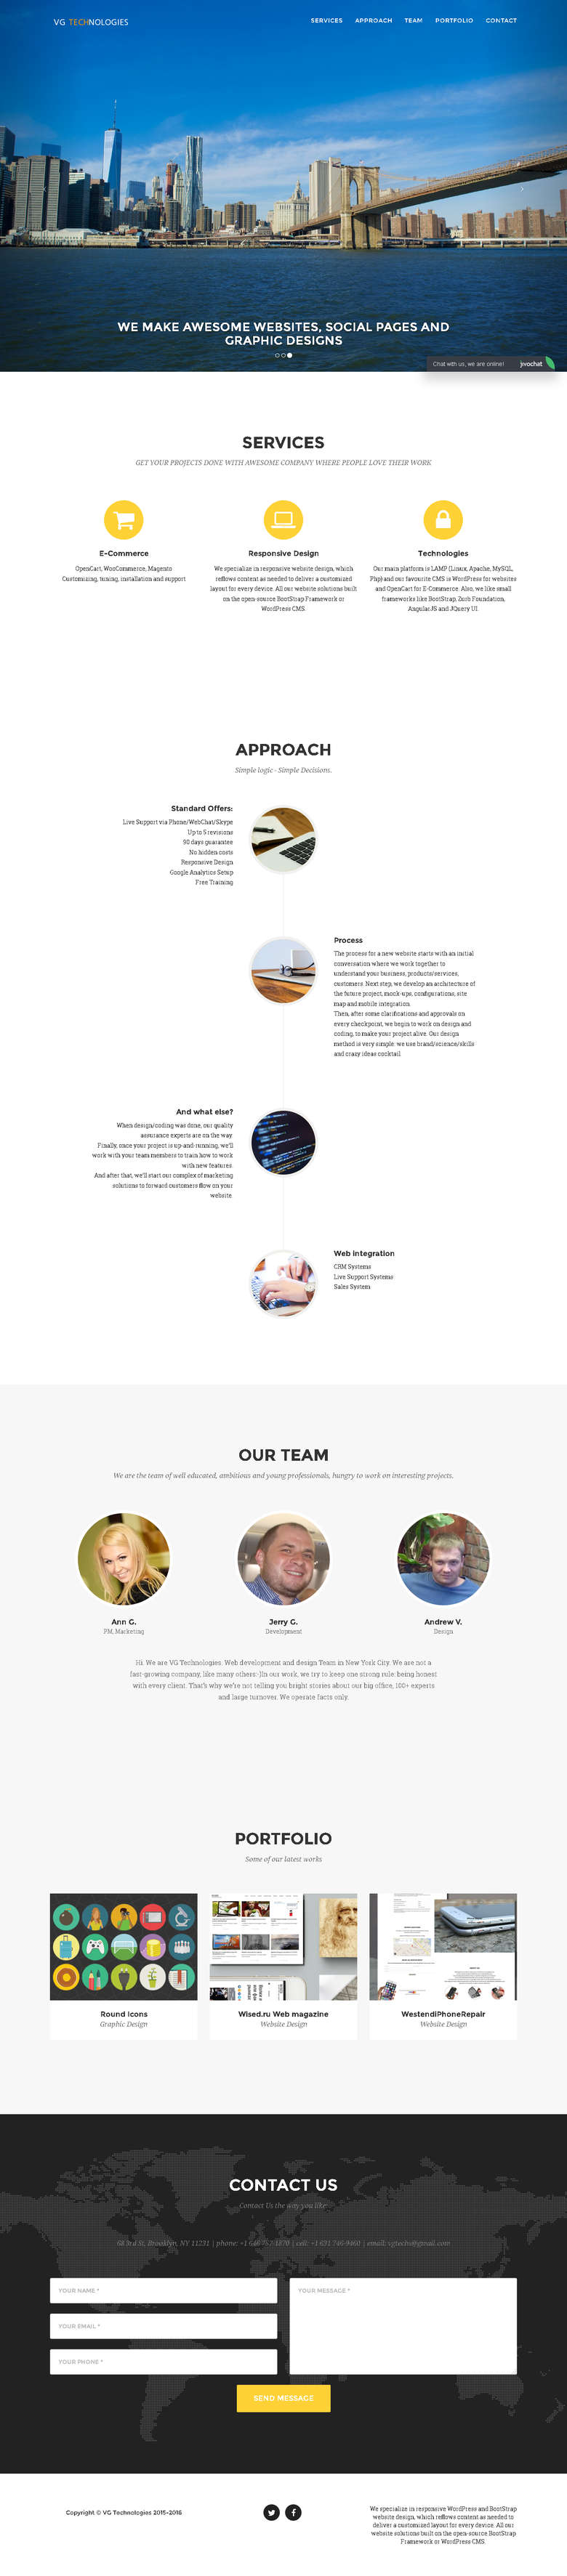 VG Technologies (New York Web Design Team)